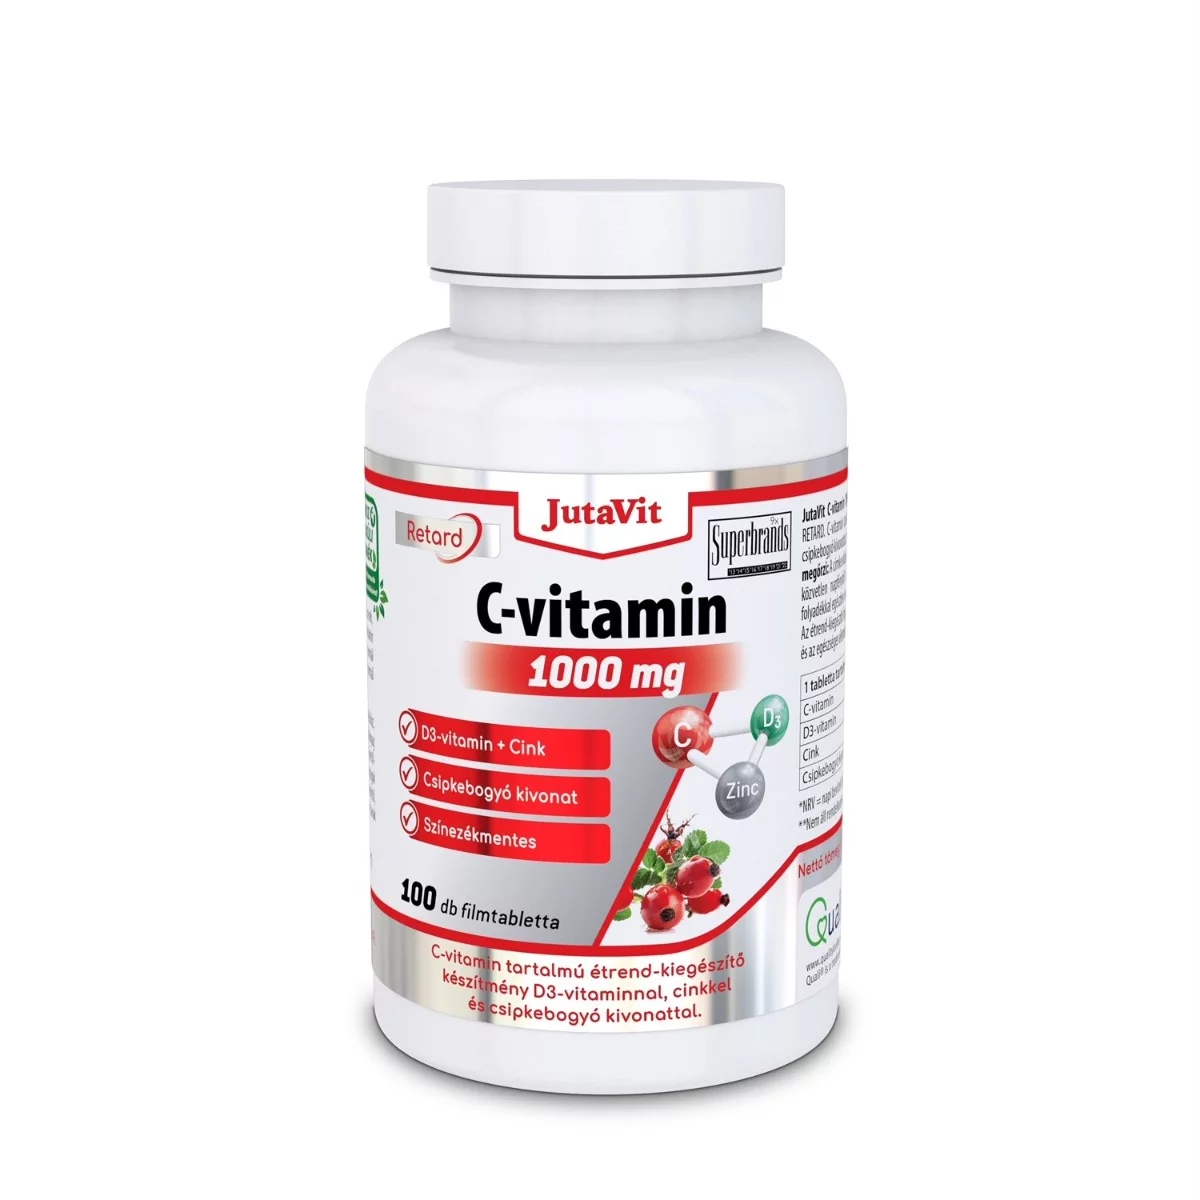 JutaVit filmtabletta 100db C-vitamin 1000mg retard + csipkeb.kiv. + D3 + Cink